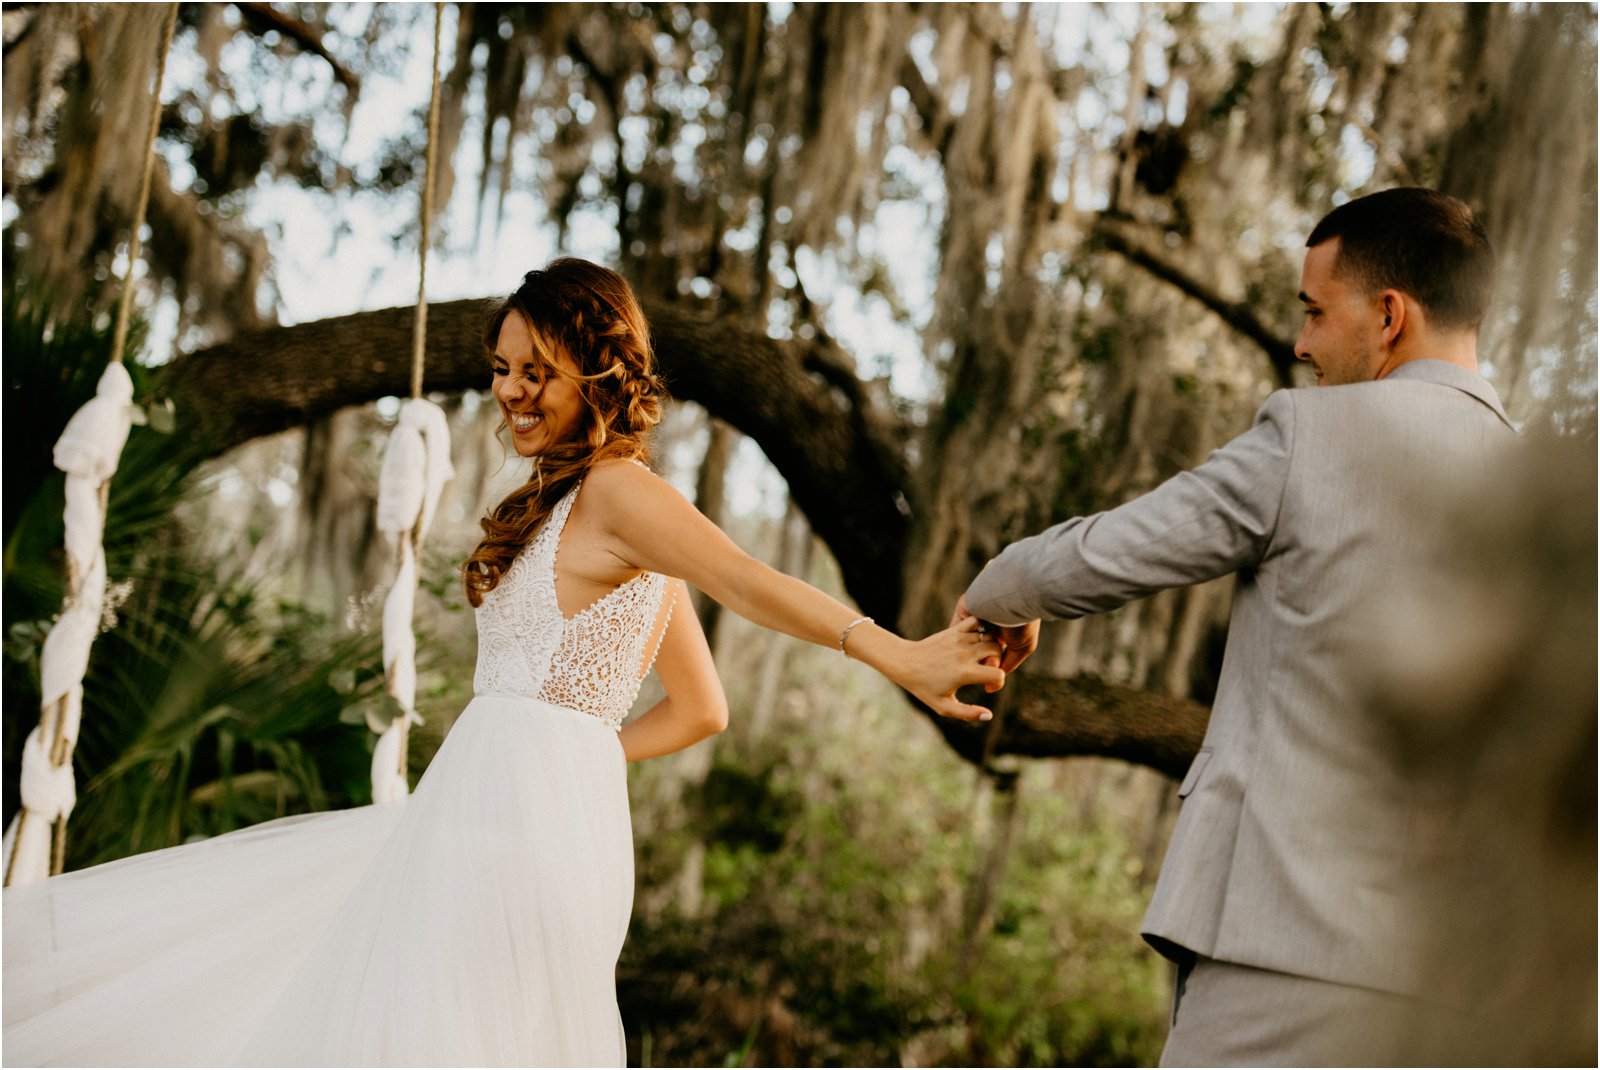 Tampa Florida Rustic Barn Wedding by Studio 29 photography